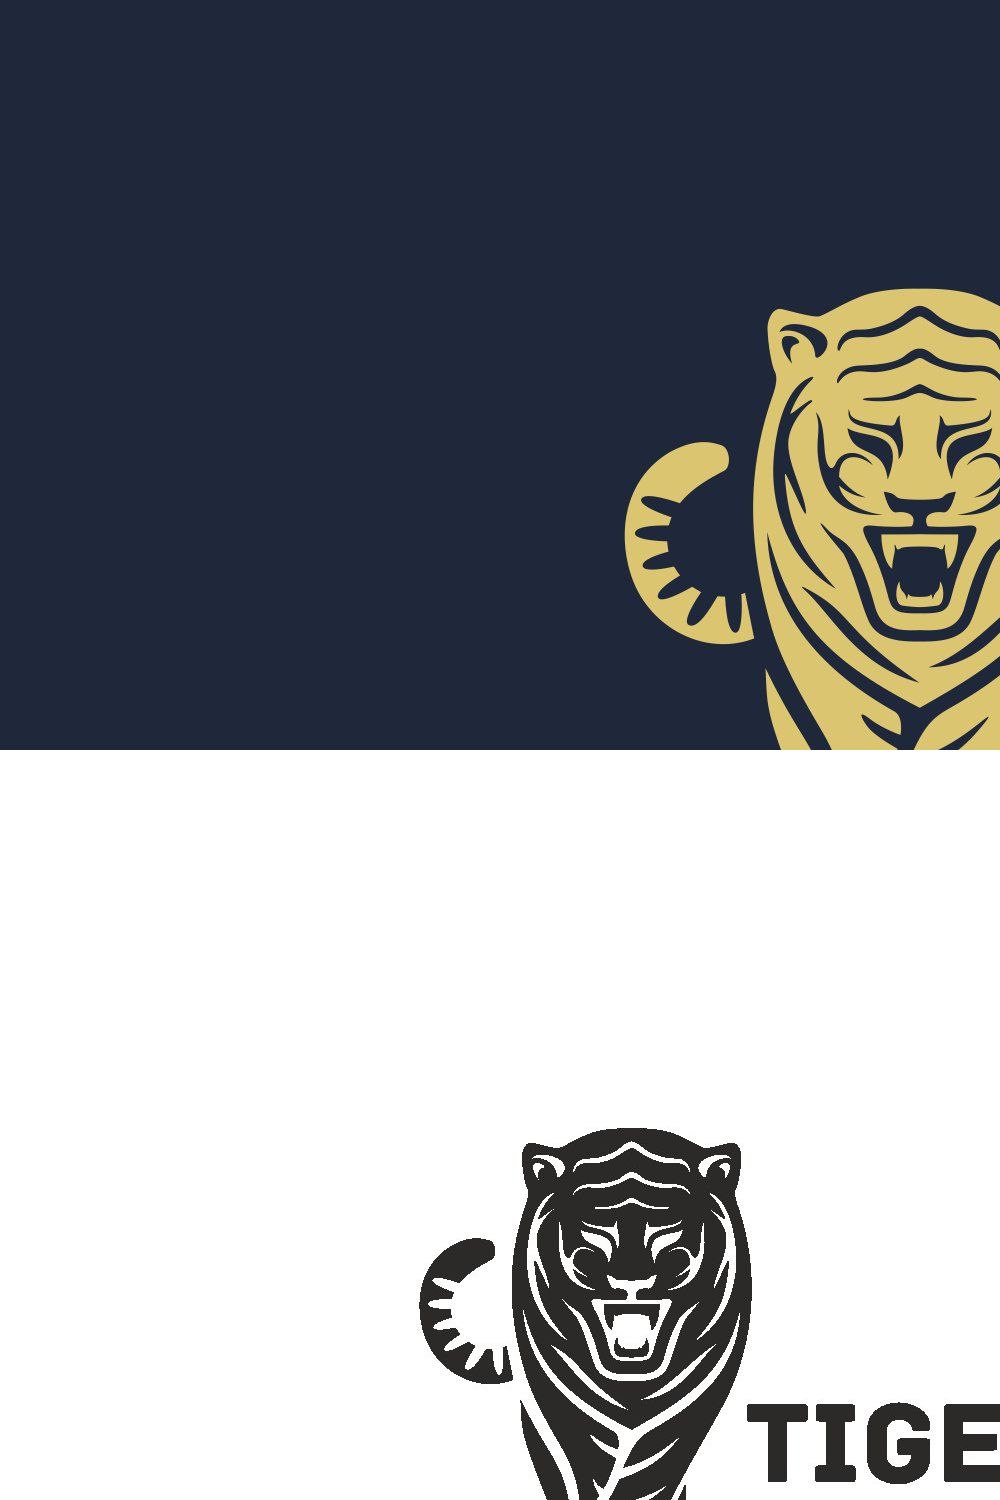 Tiger Logo pinterest preview image.